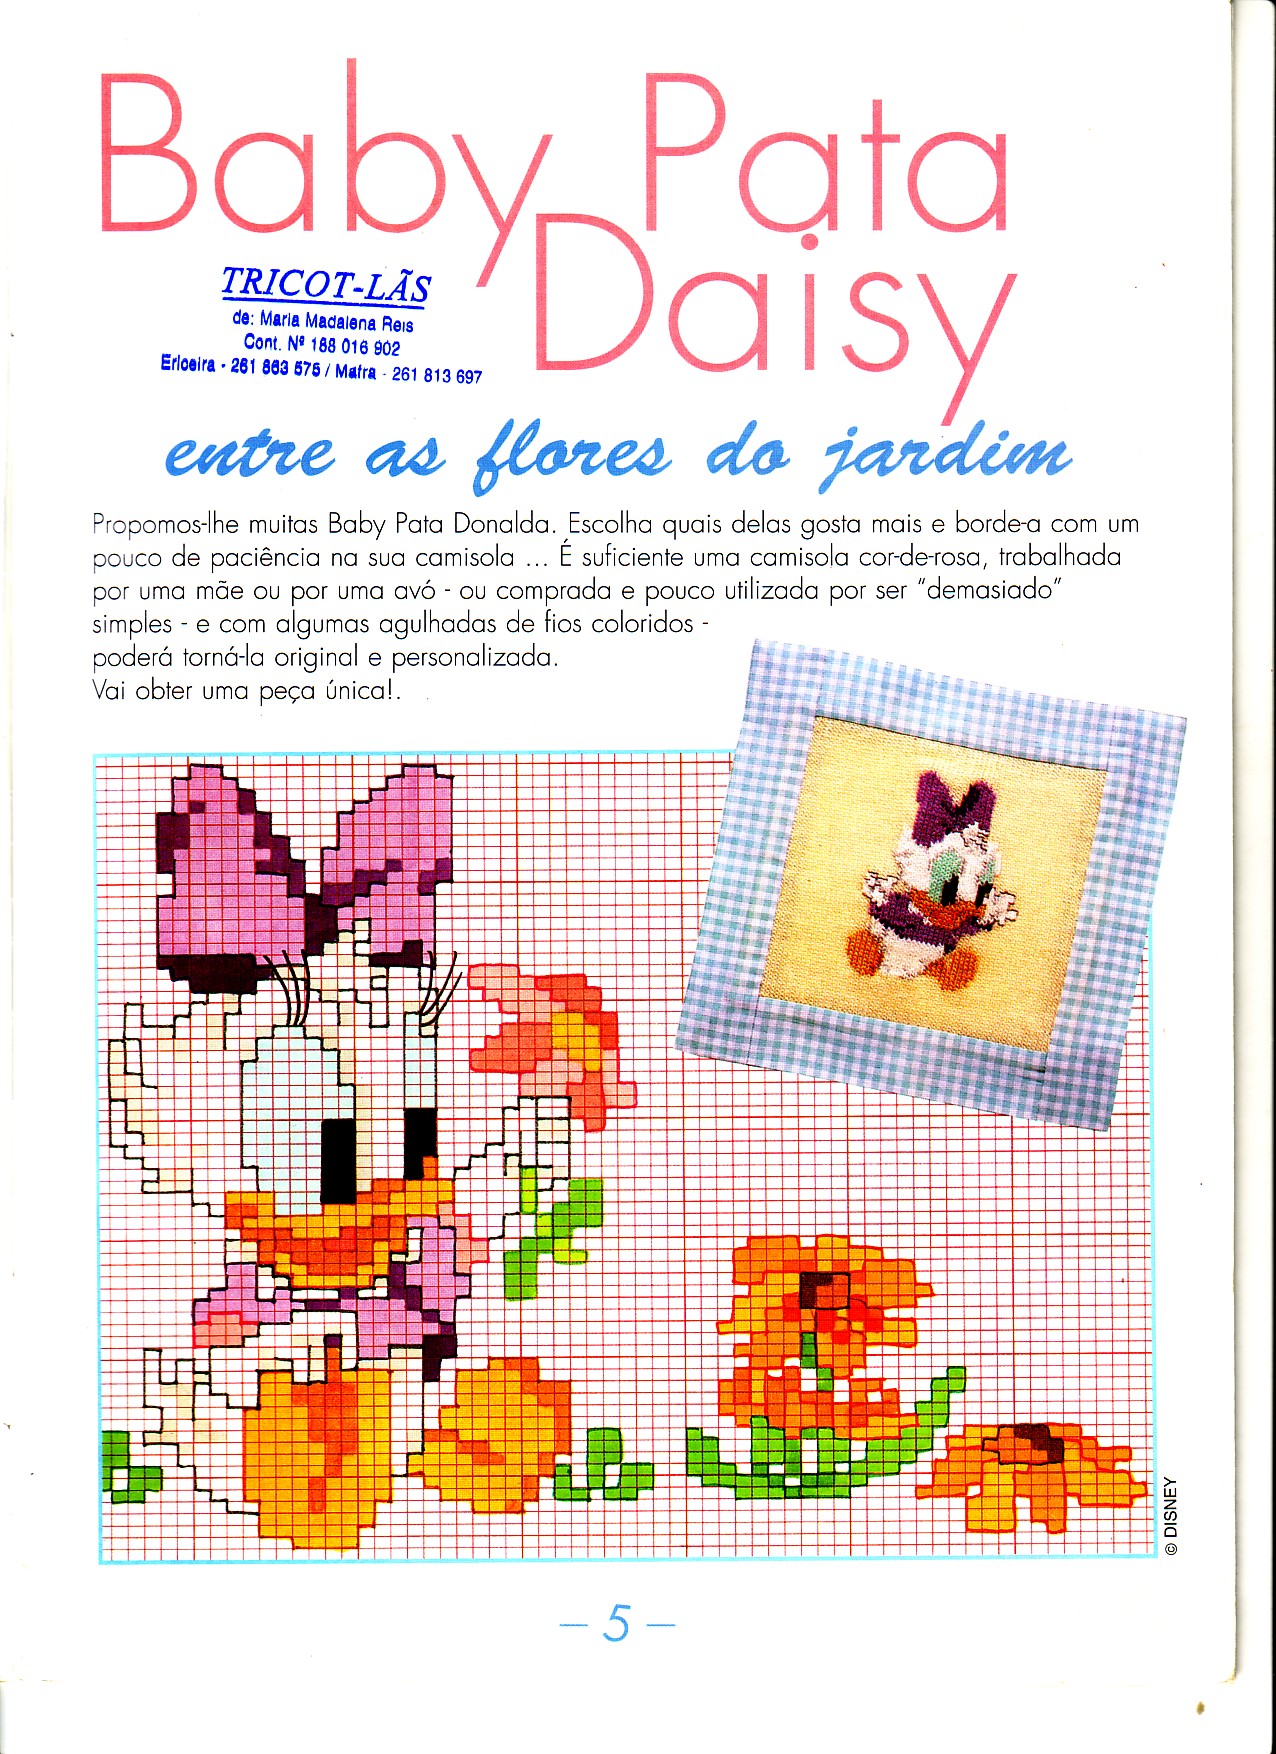 Baby Daisy Duck cross stitch pattern in the garden